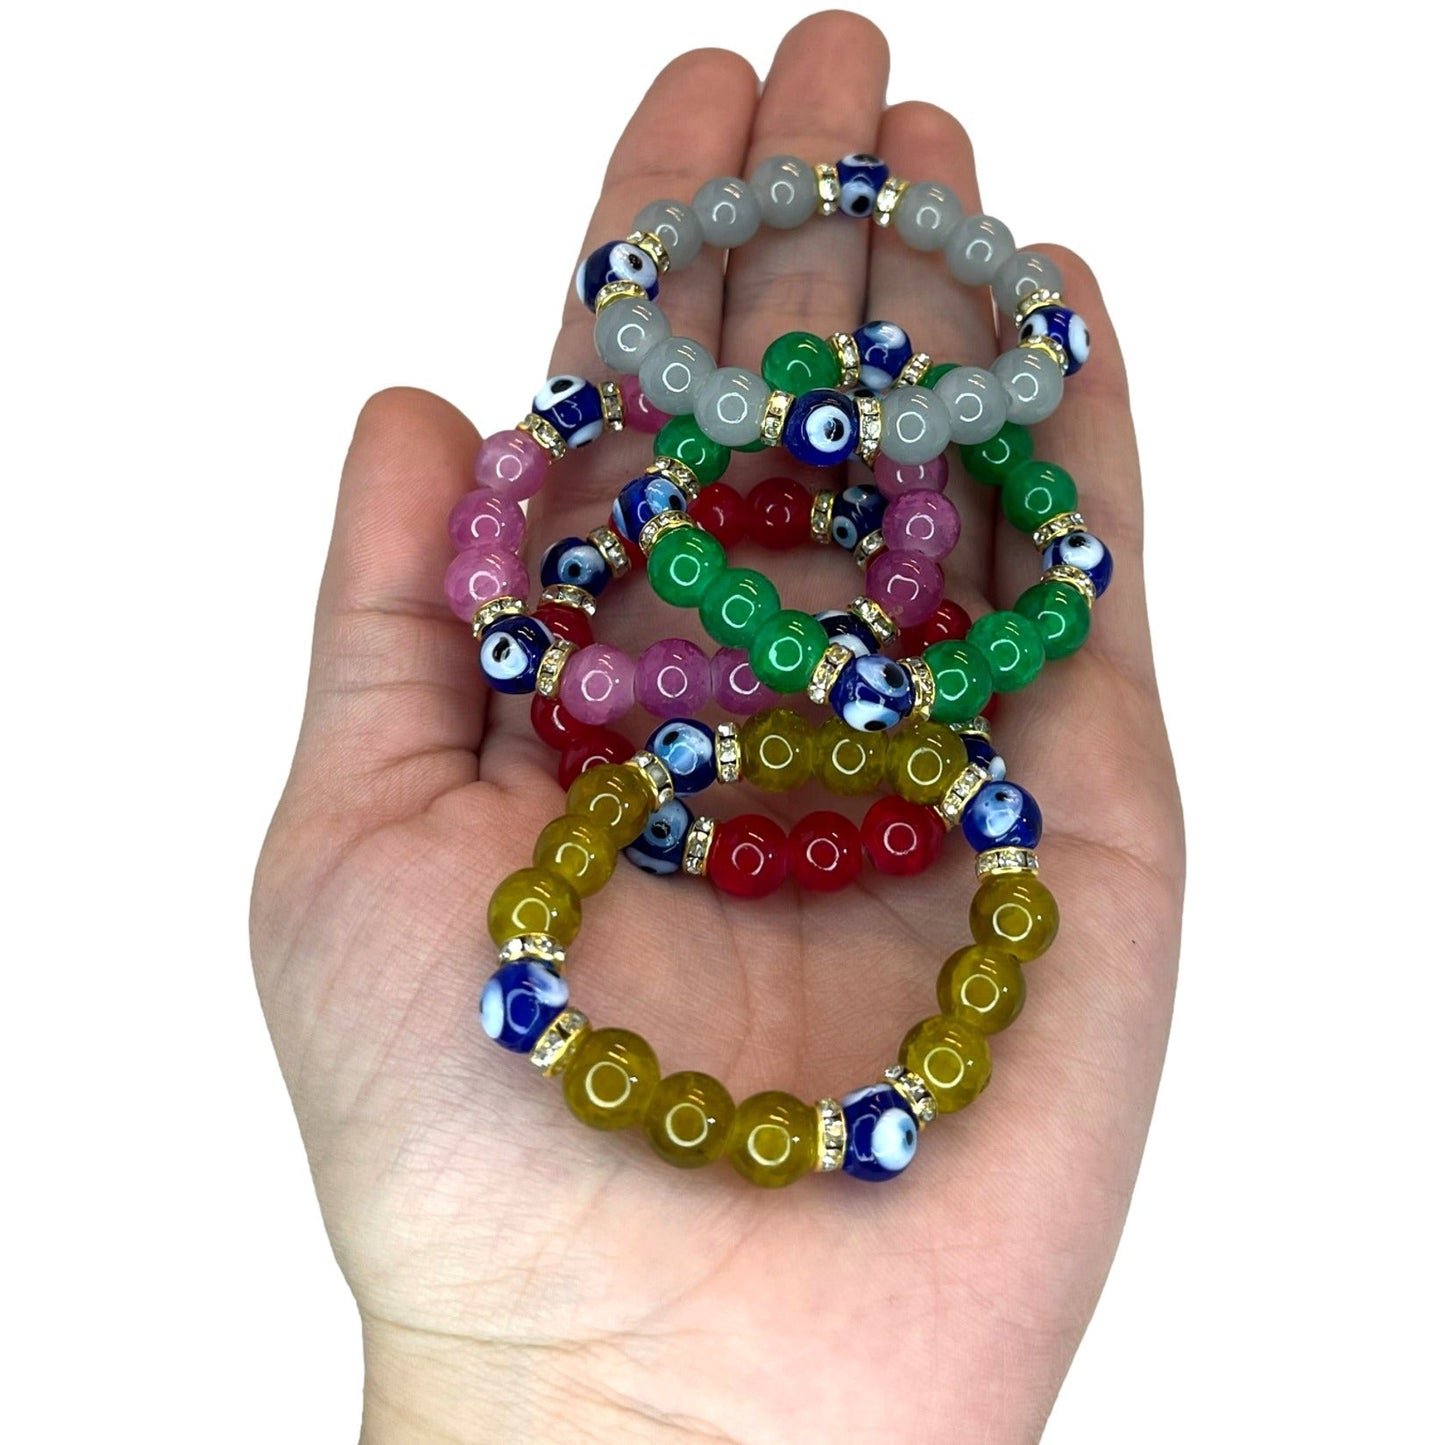 Multi-Colored Assorted Agate, Jasper and Quartz Kids Evil Eye Bracelet w Rhinestone Jumpers.